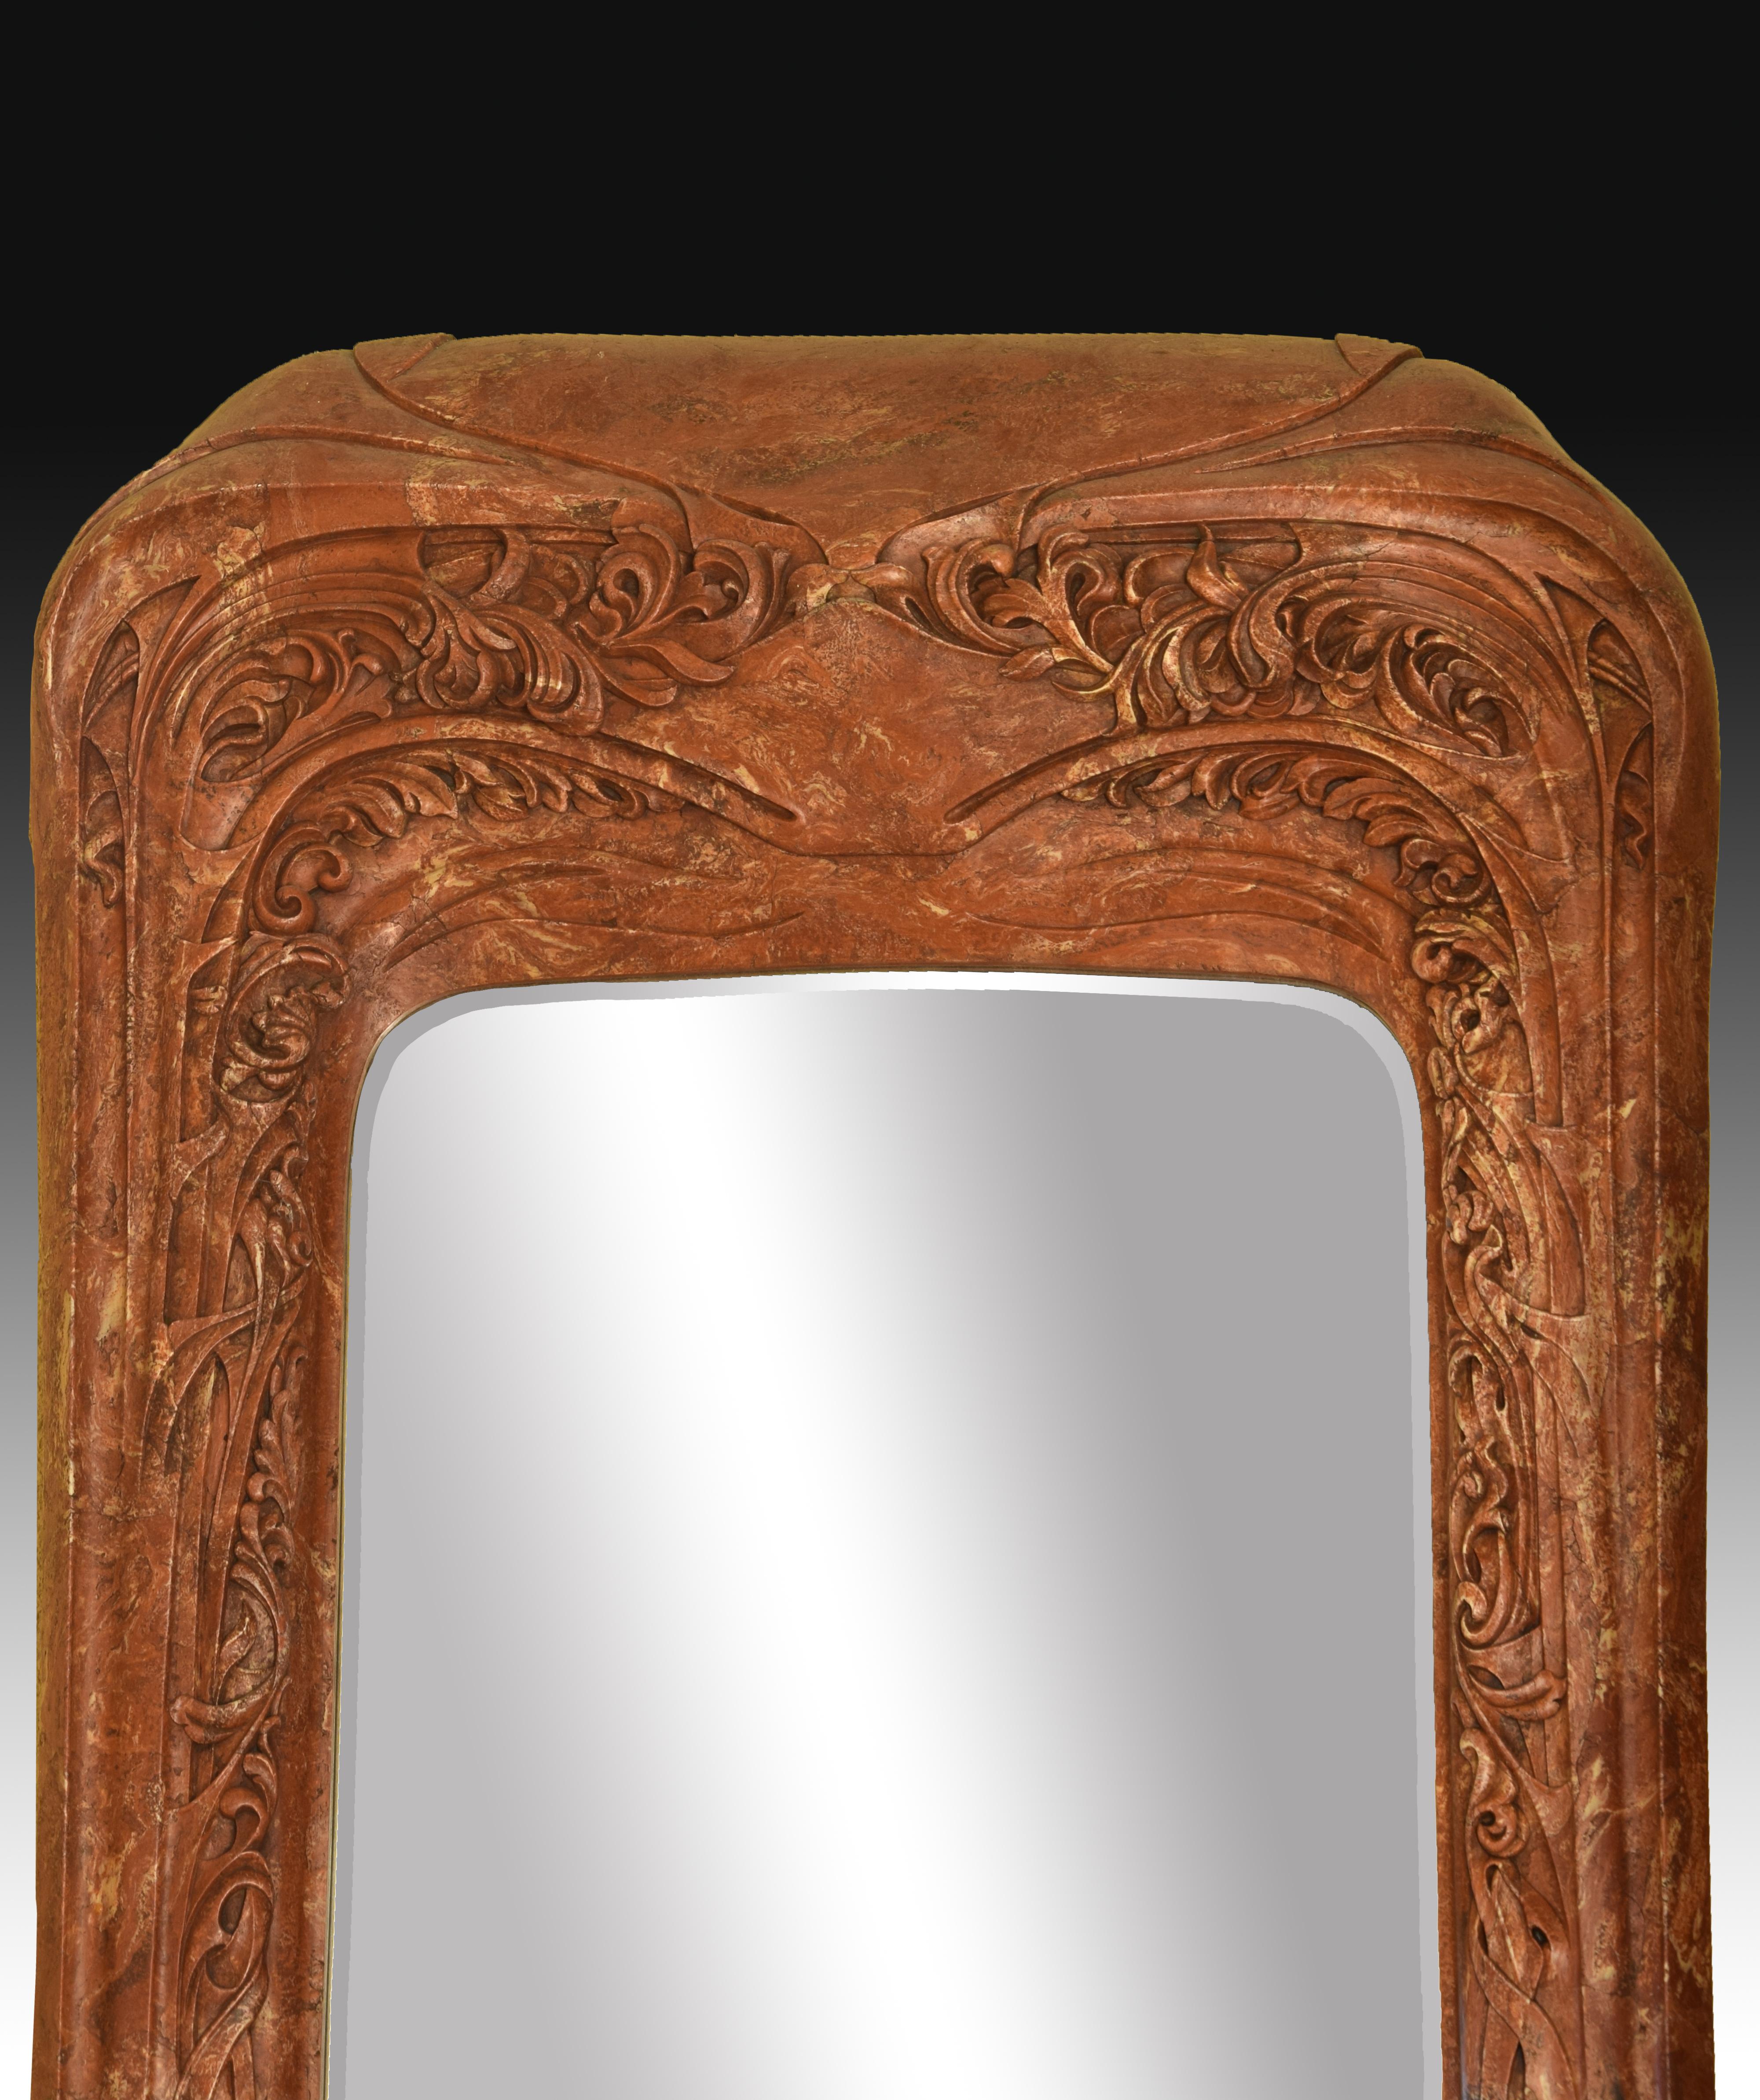 European Art Nouveau Mirror in Marble Powder